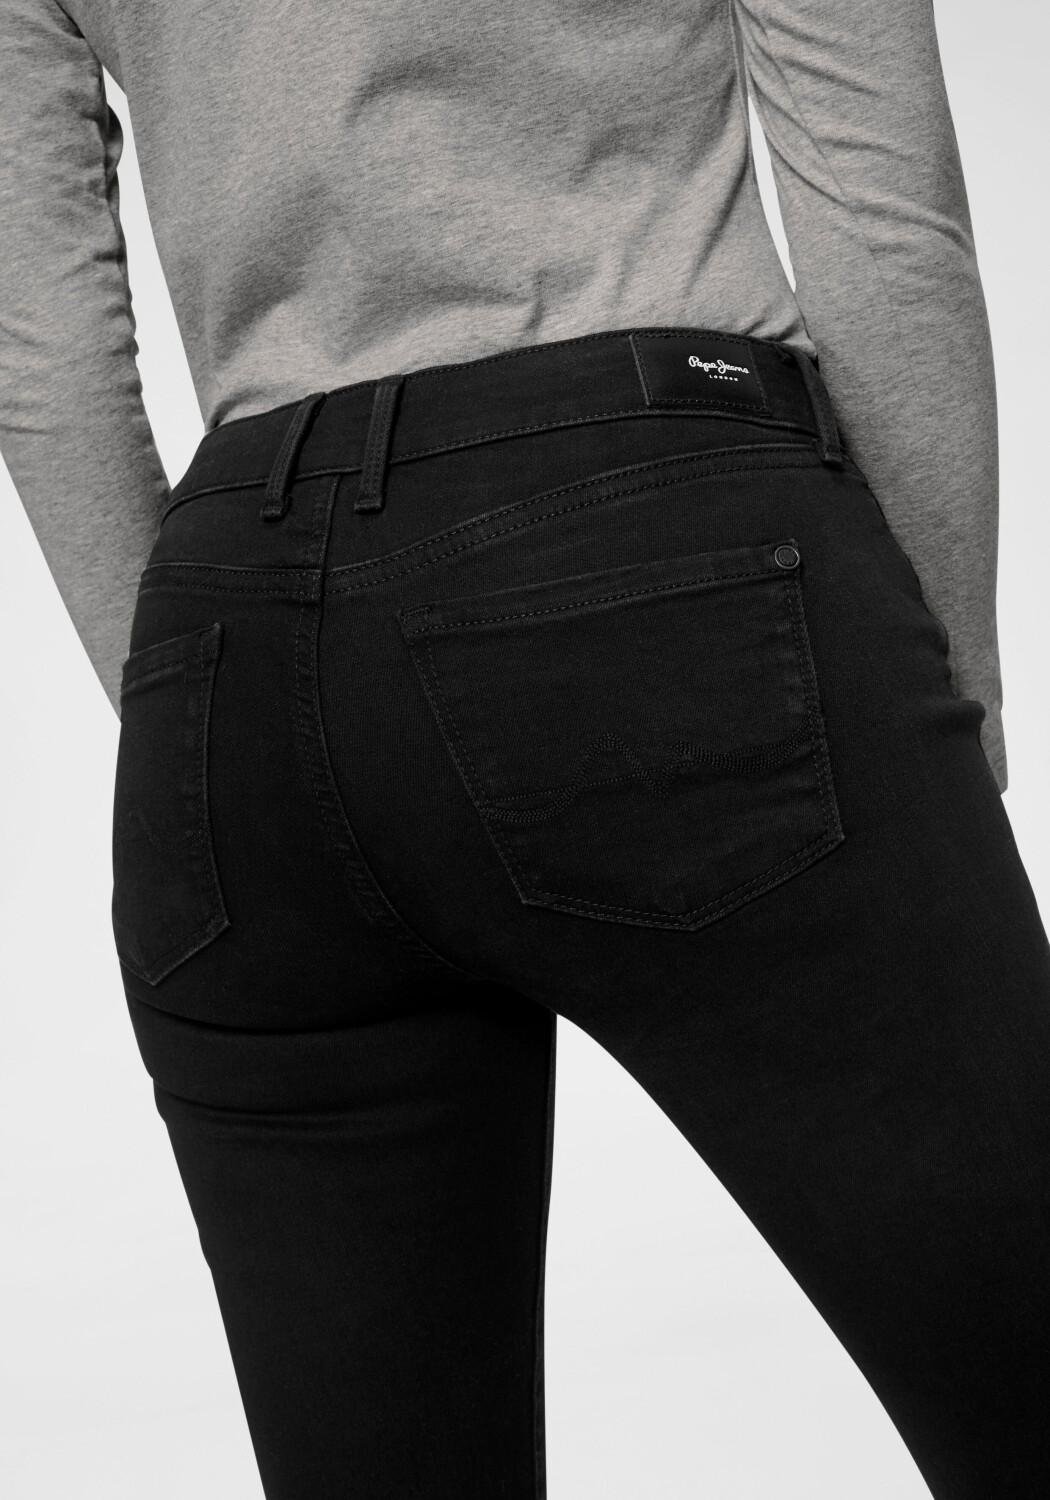 Pepe Jeans Soho Slim Fit Mid Waist Jeans S98 black denim ab 39,28 € |  Preisvergleich bei